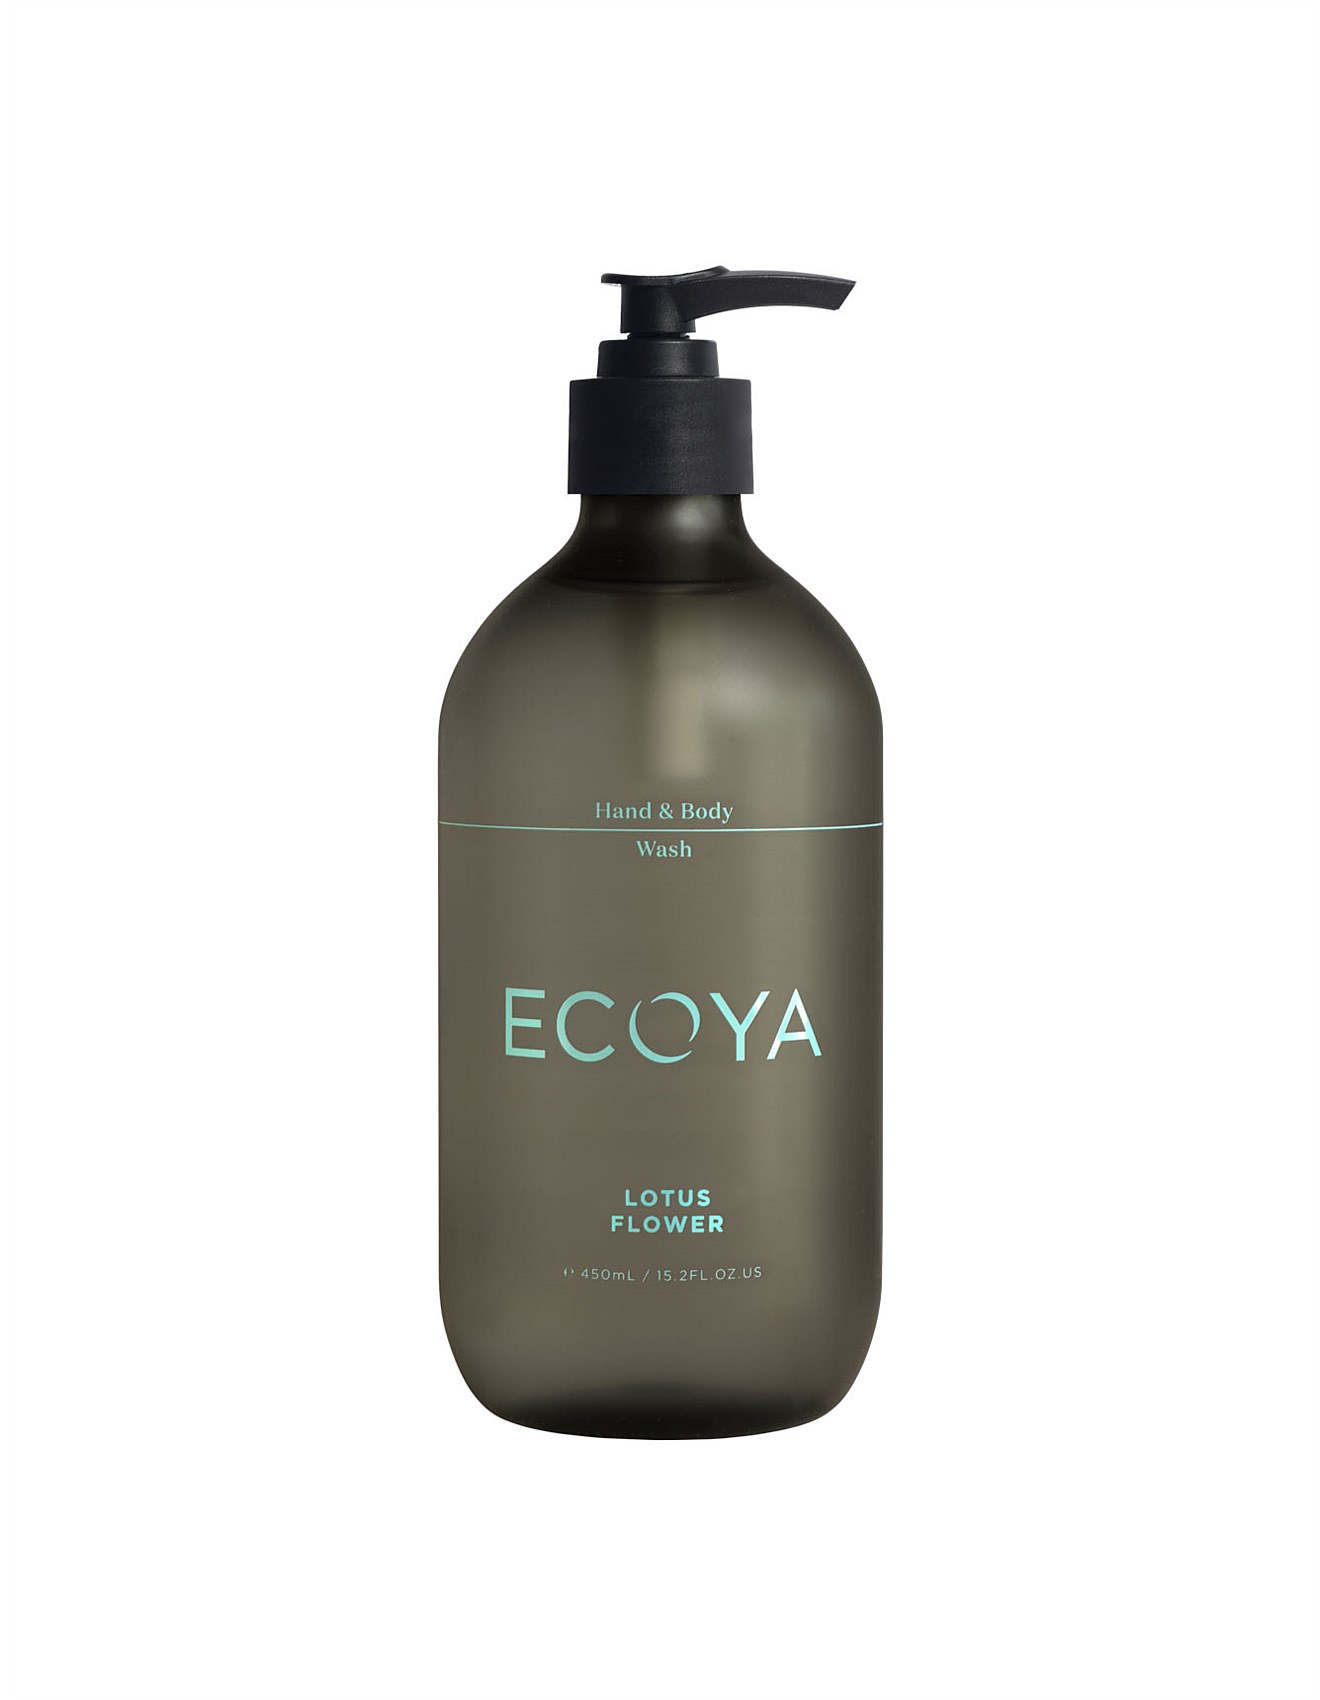 Ecoya Lotus Flower Hand & Body Wash 450ML